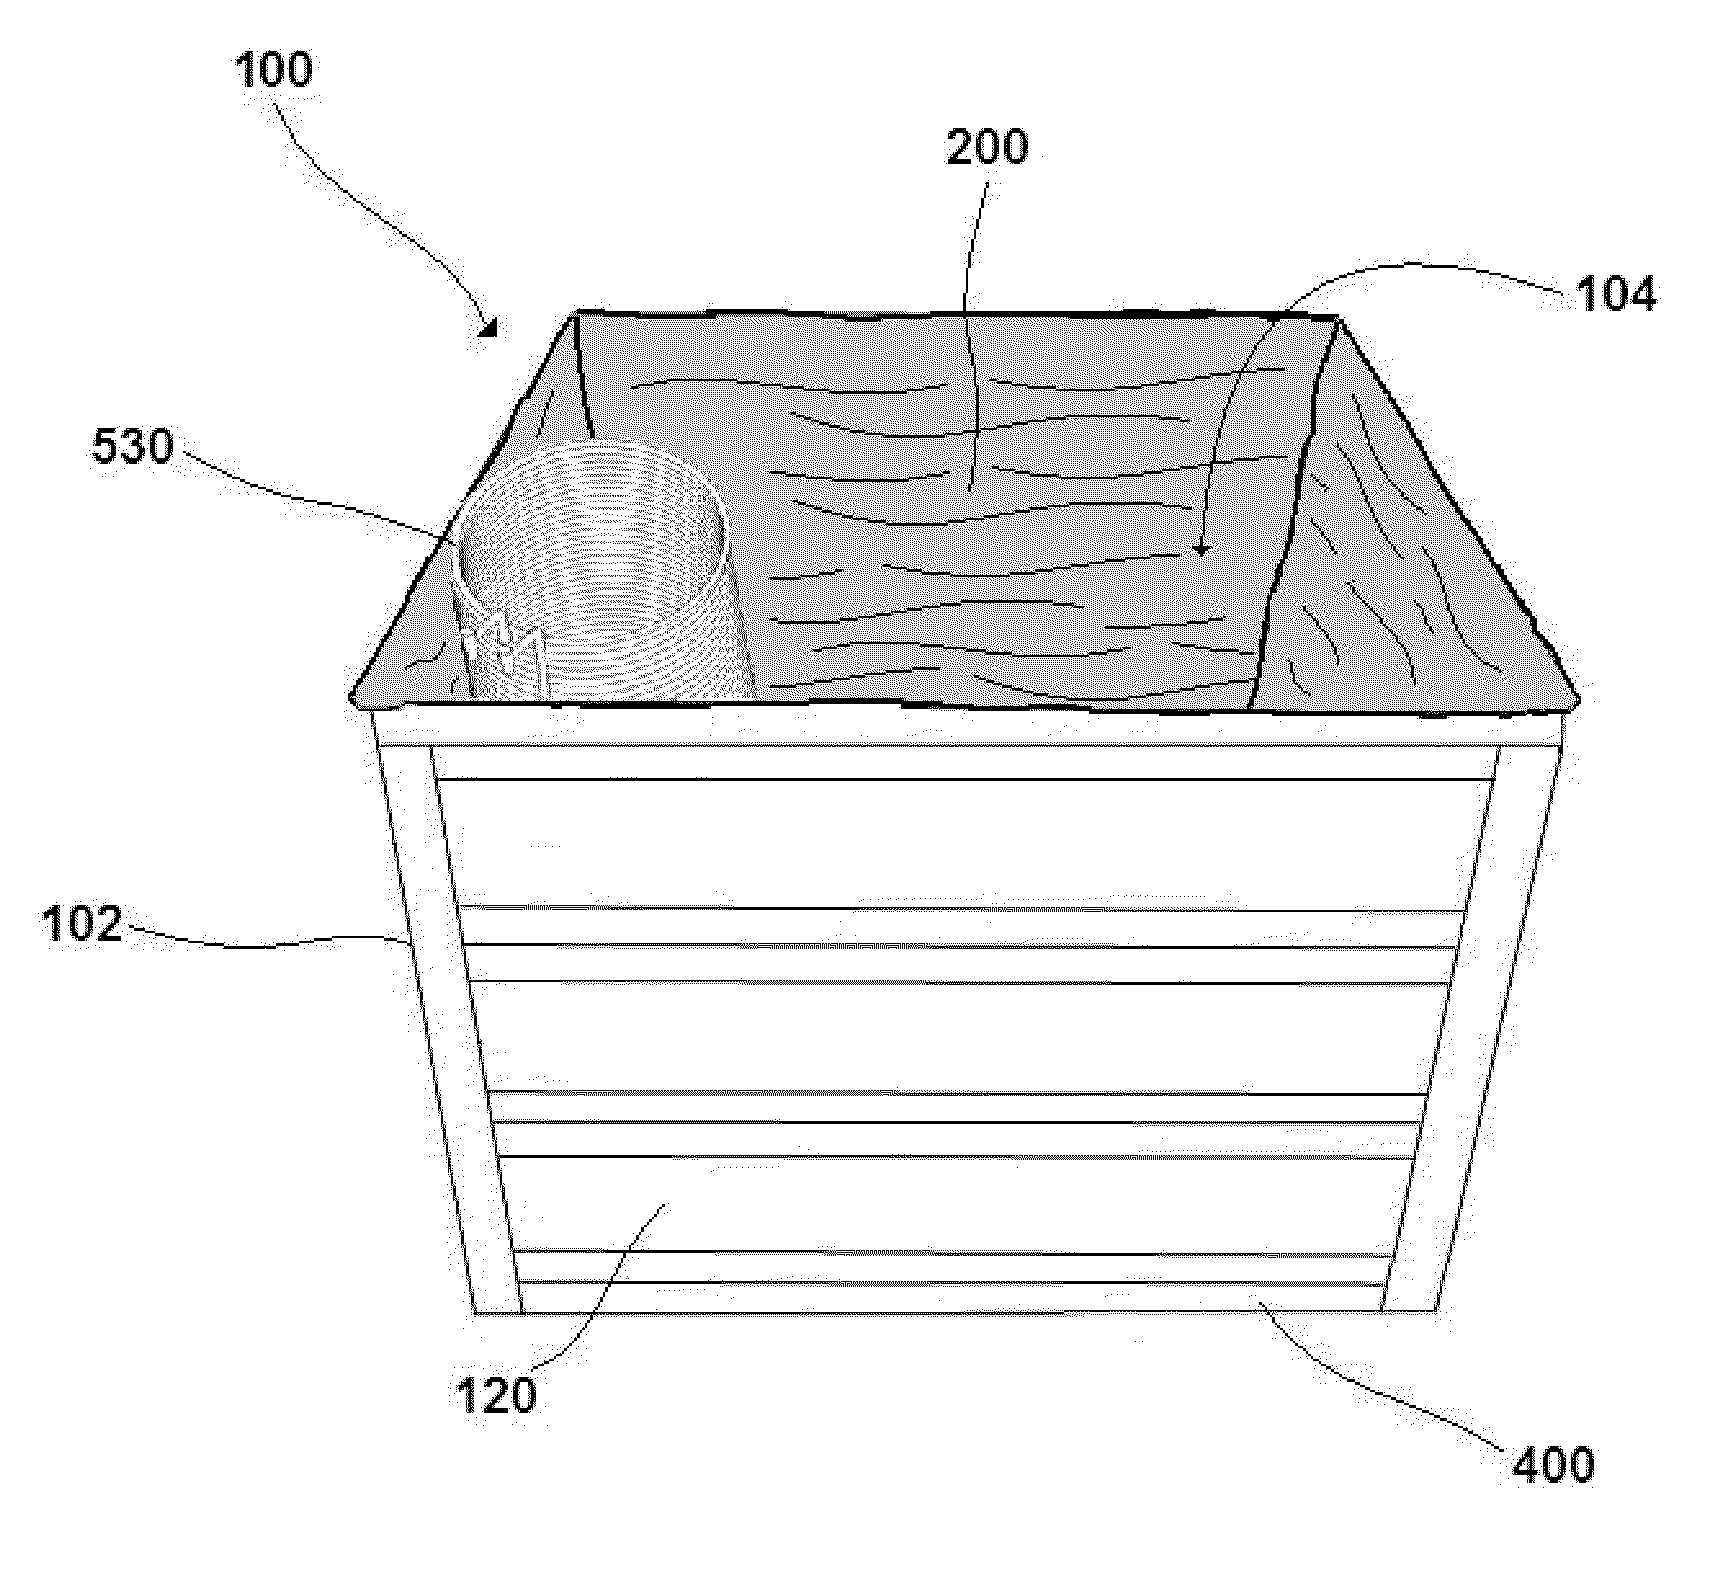 Modular insulated water tank